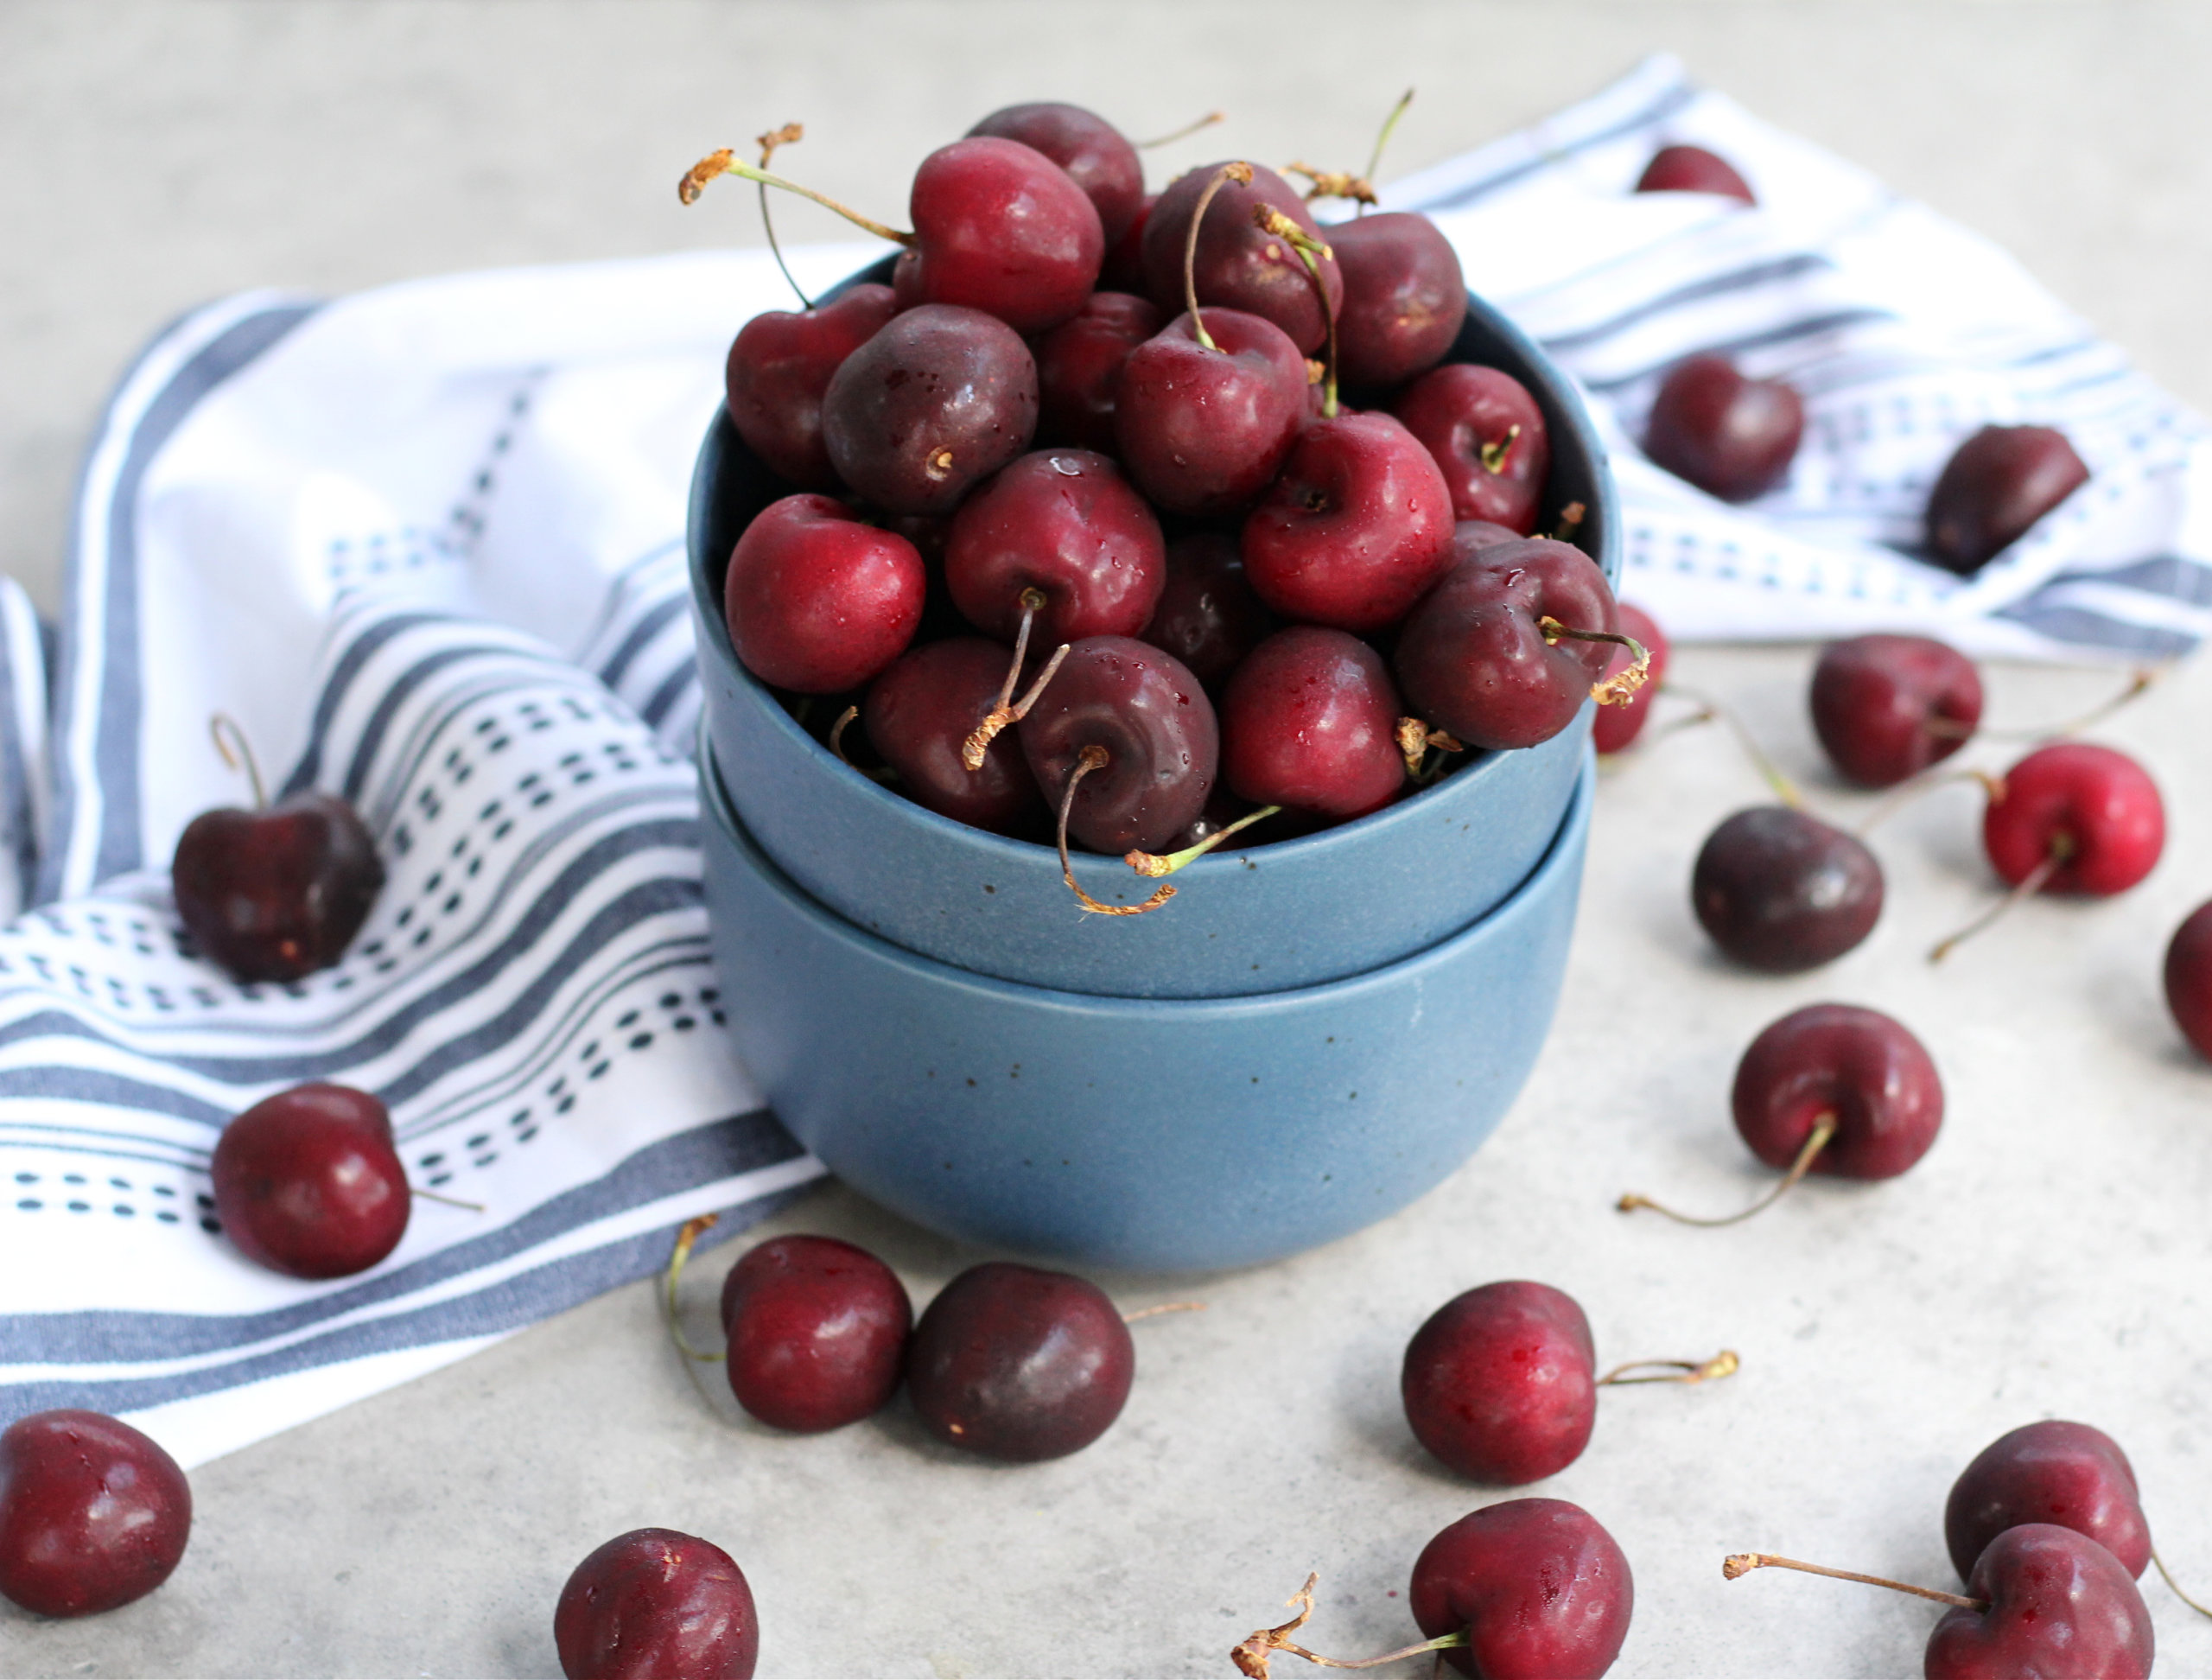 stemilt-cherries(1)- clafouti